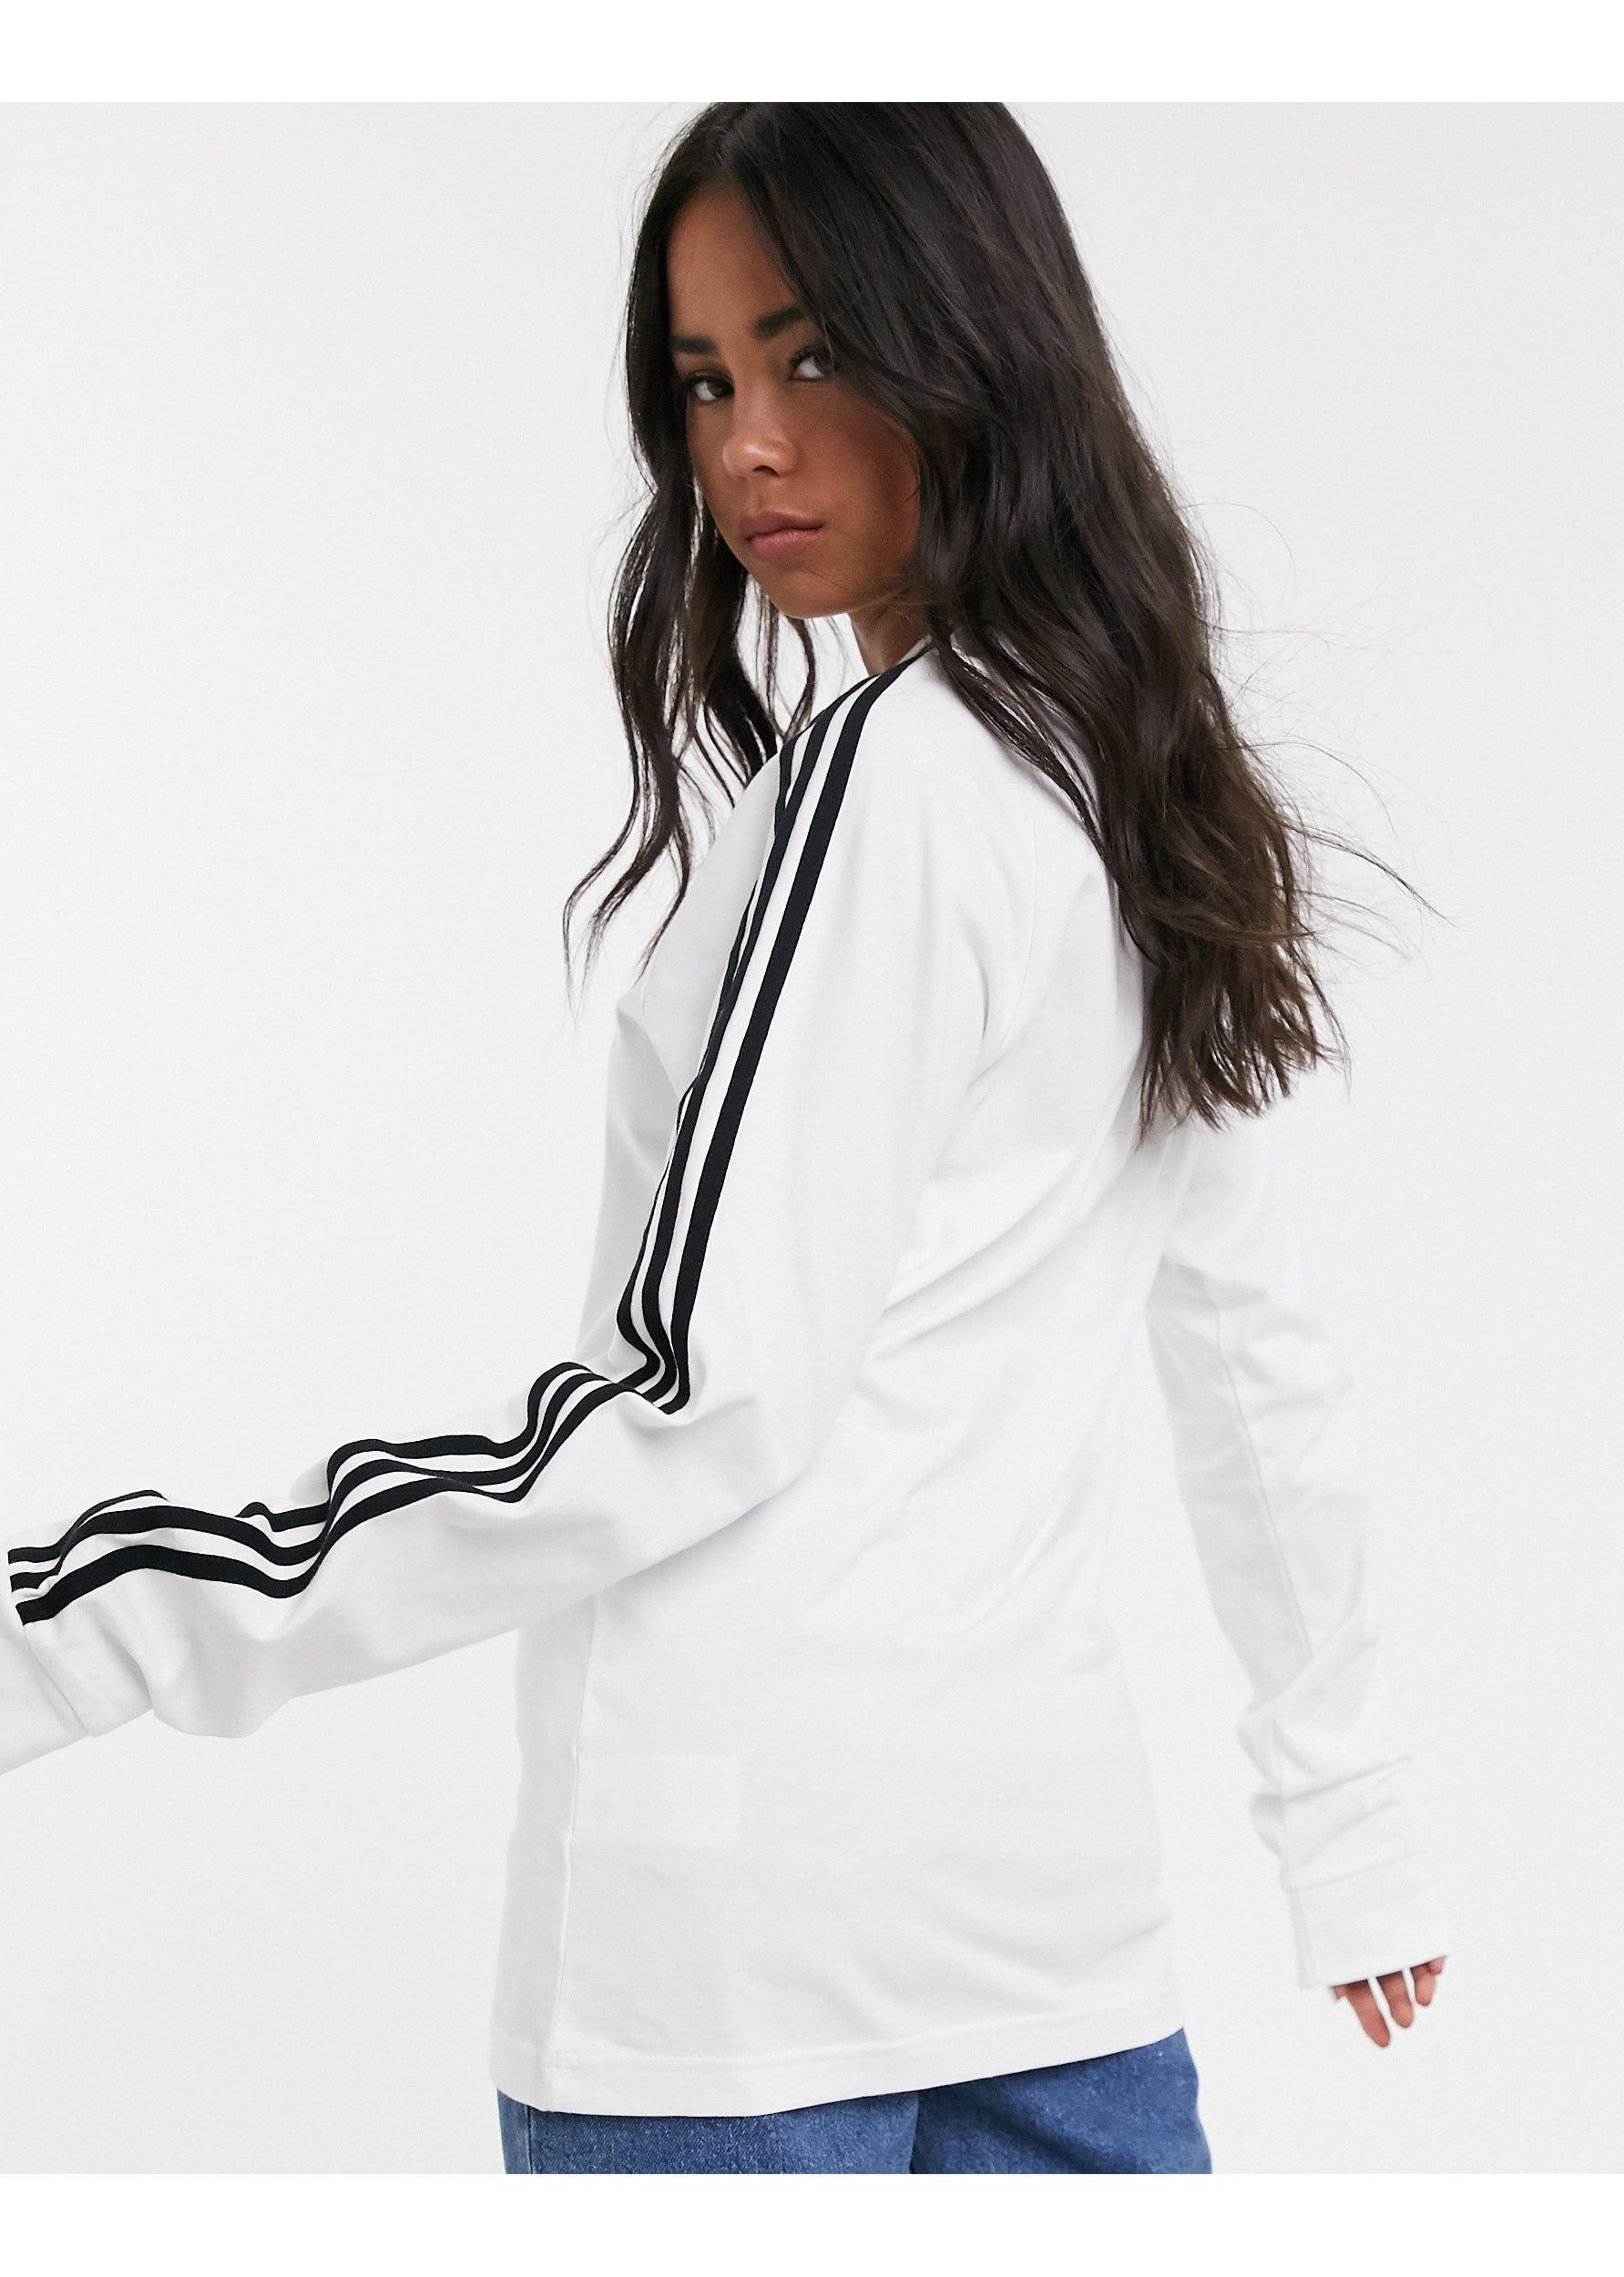 adidas Originals Adicolor Three Stripe Long Sleeve T-shirt in White | Lyst